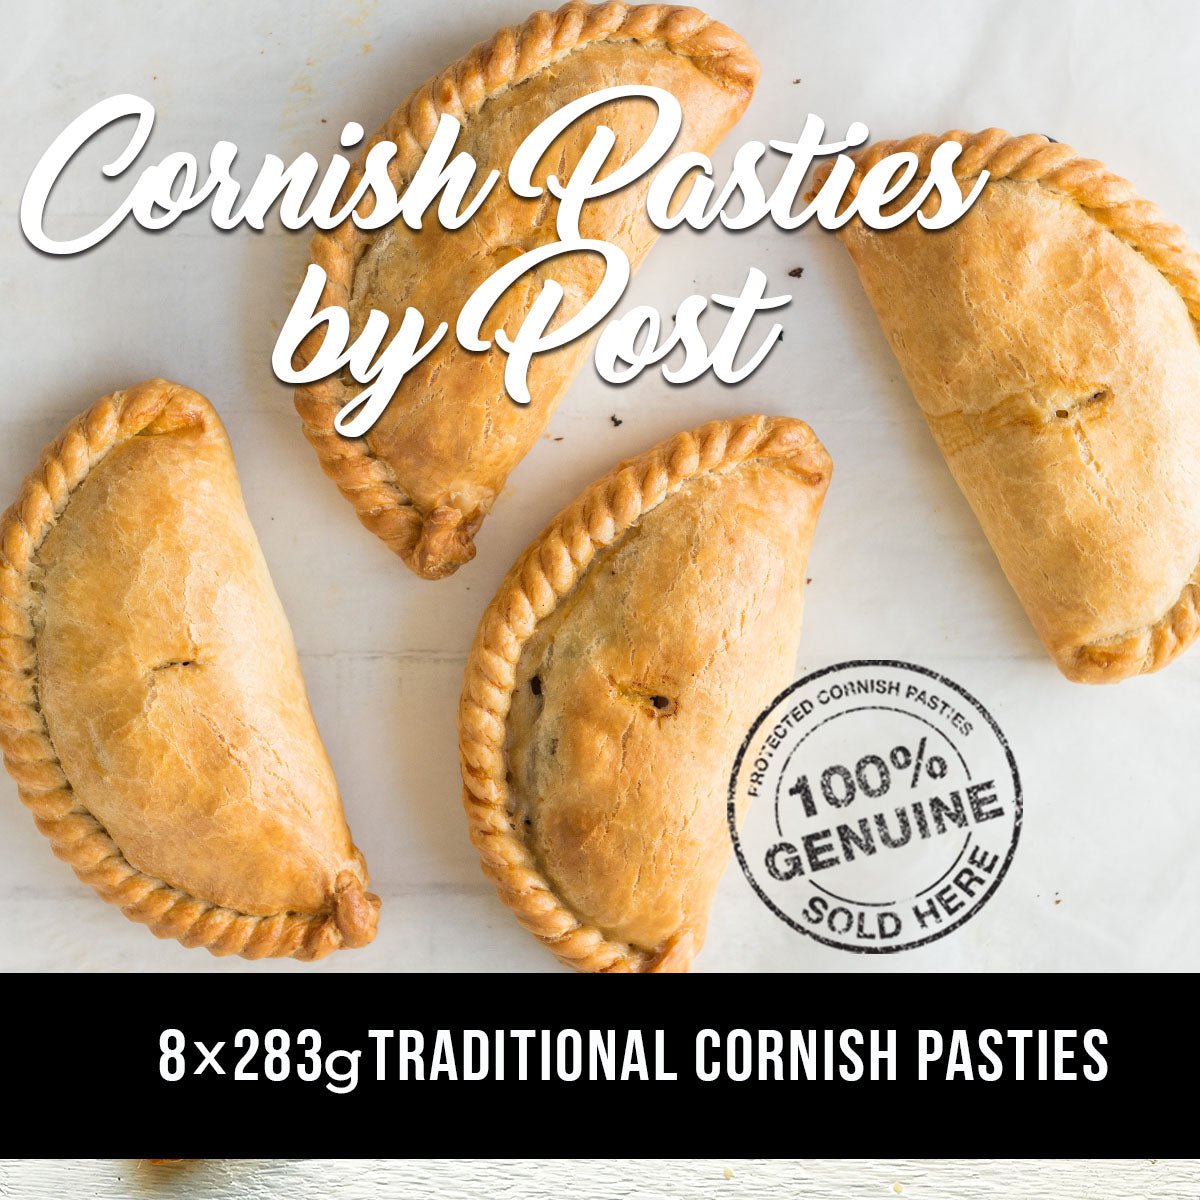 'All Cornish' Steak Pasties by Post (8) 283g - Proper Pasty Company